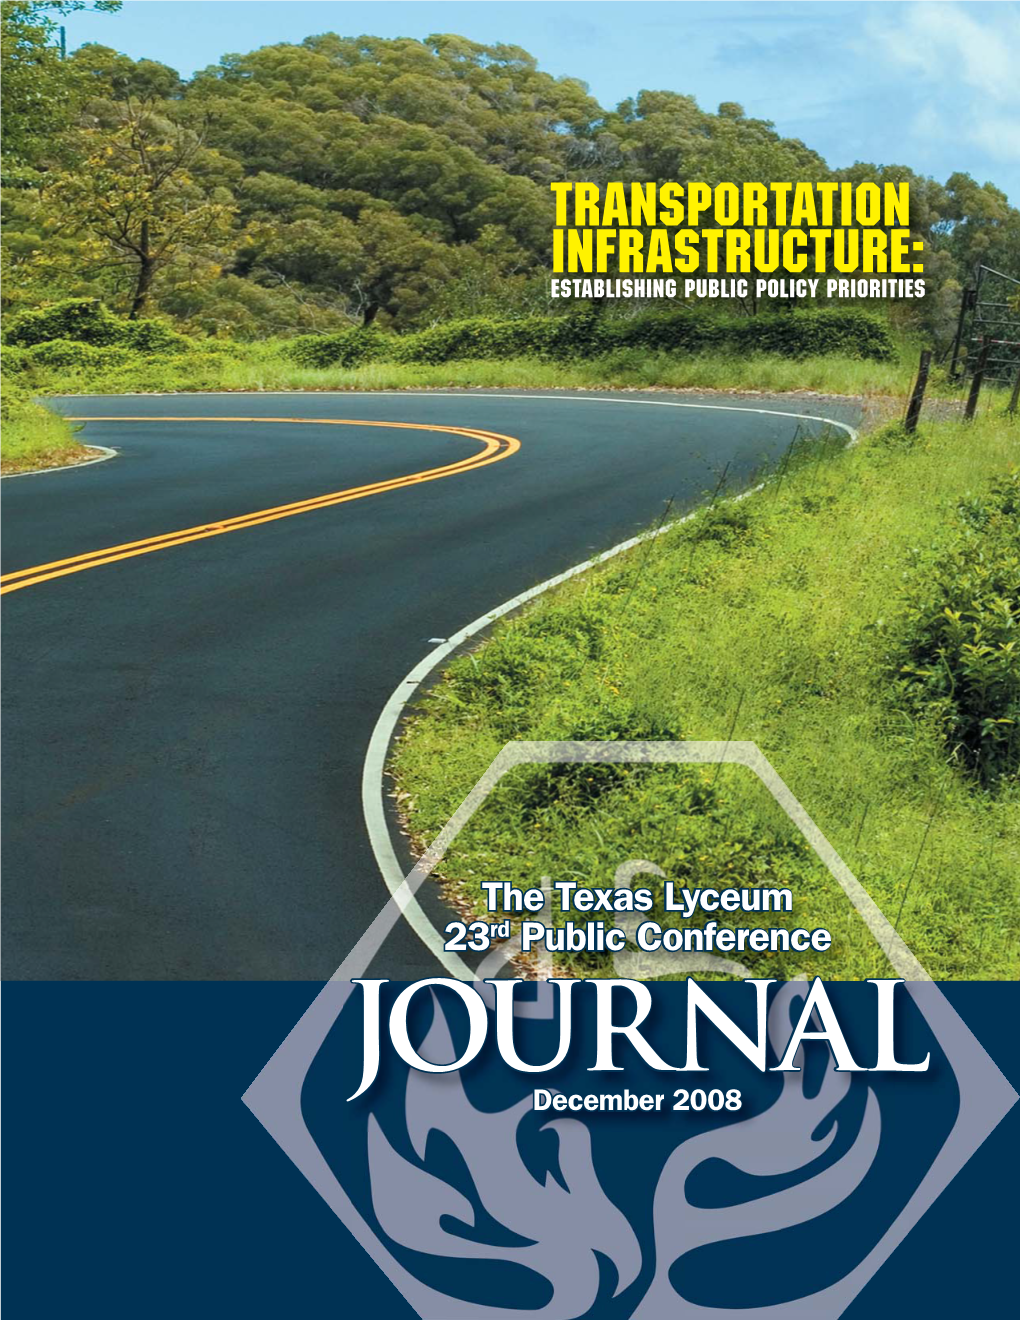 Transportation Infrastructure: Establishing Public Policy Priorities